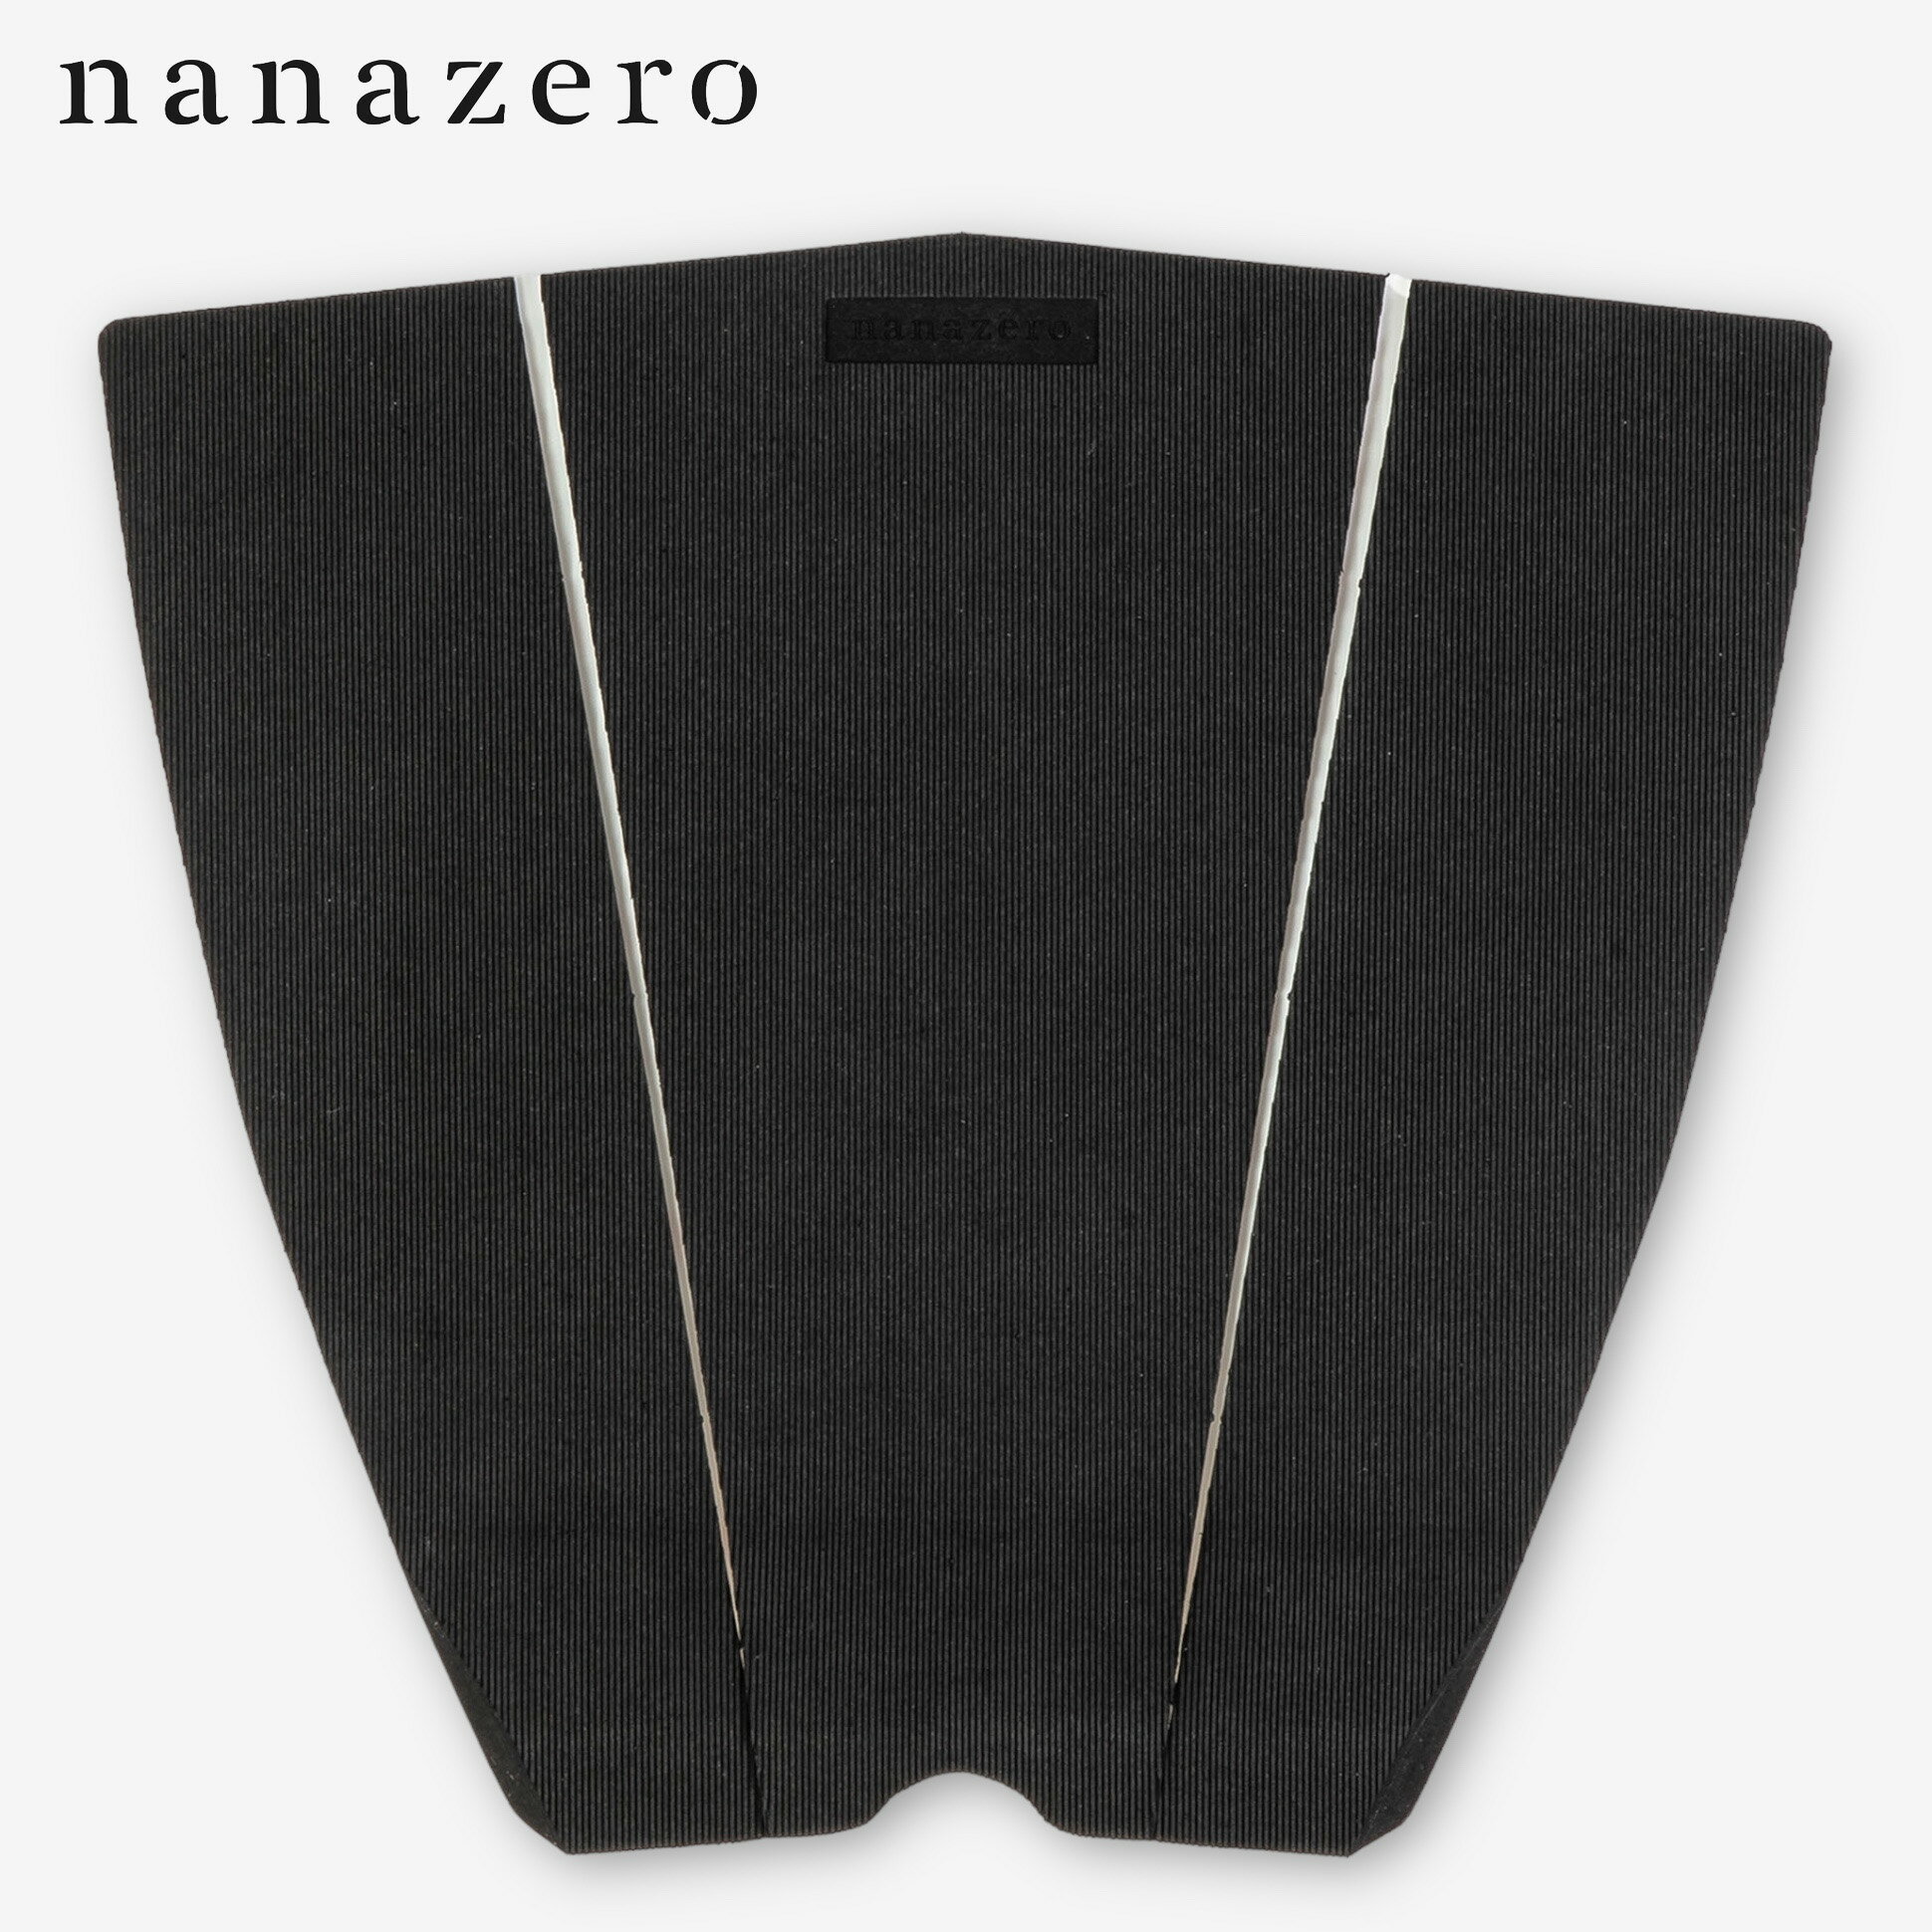 nanazero 天然素材配合のテールグリップ T01 BLOOMフォーム (サーフィン サーフボード用)